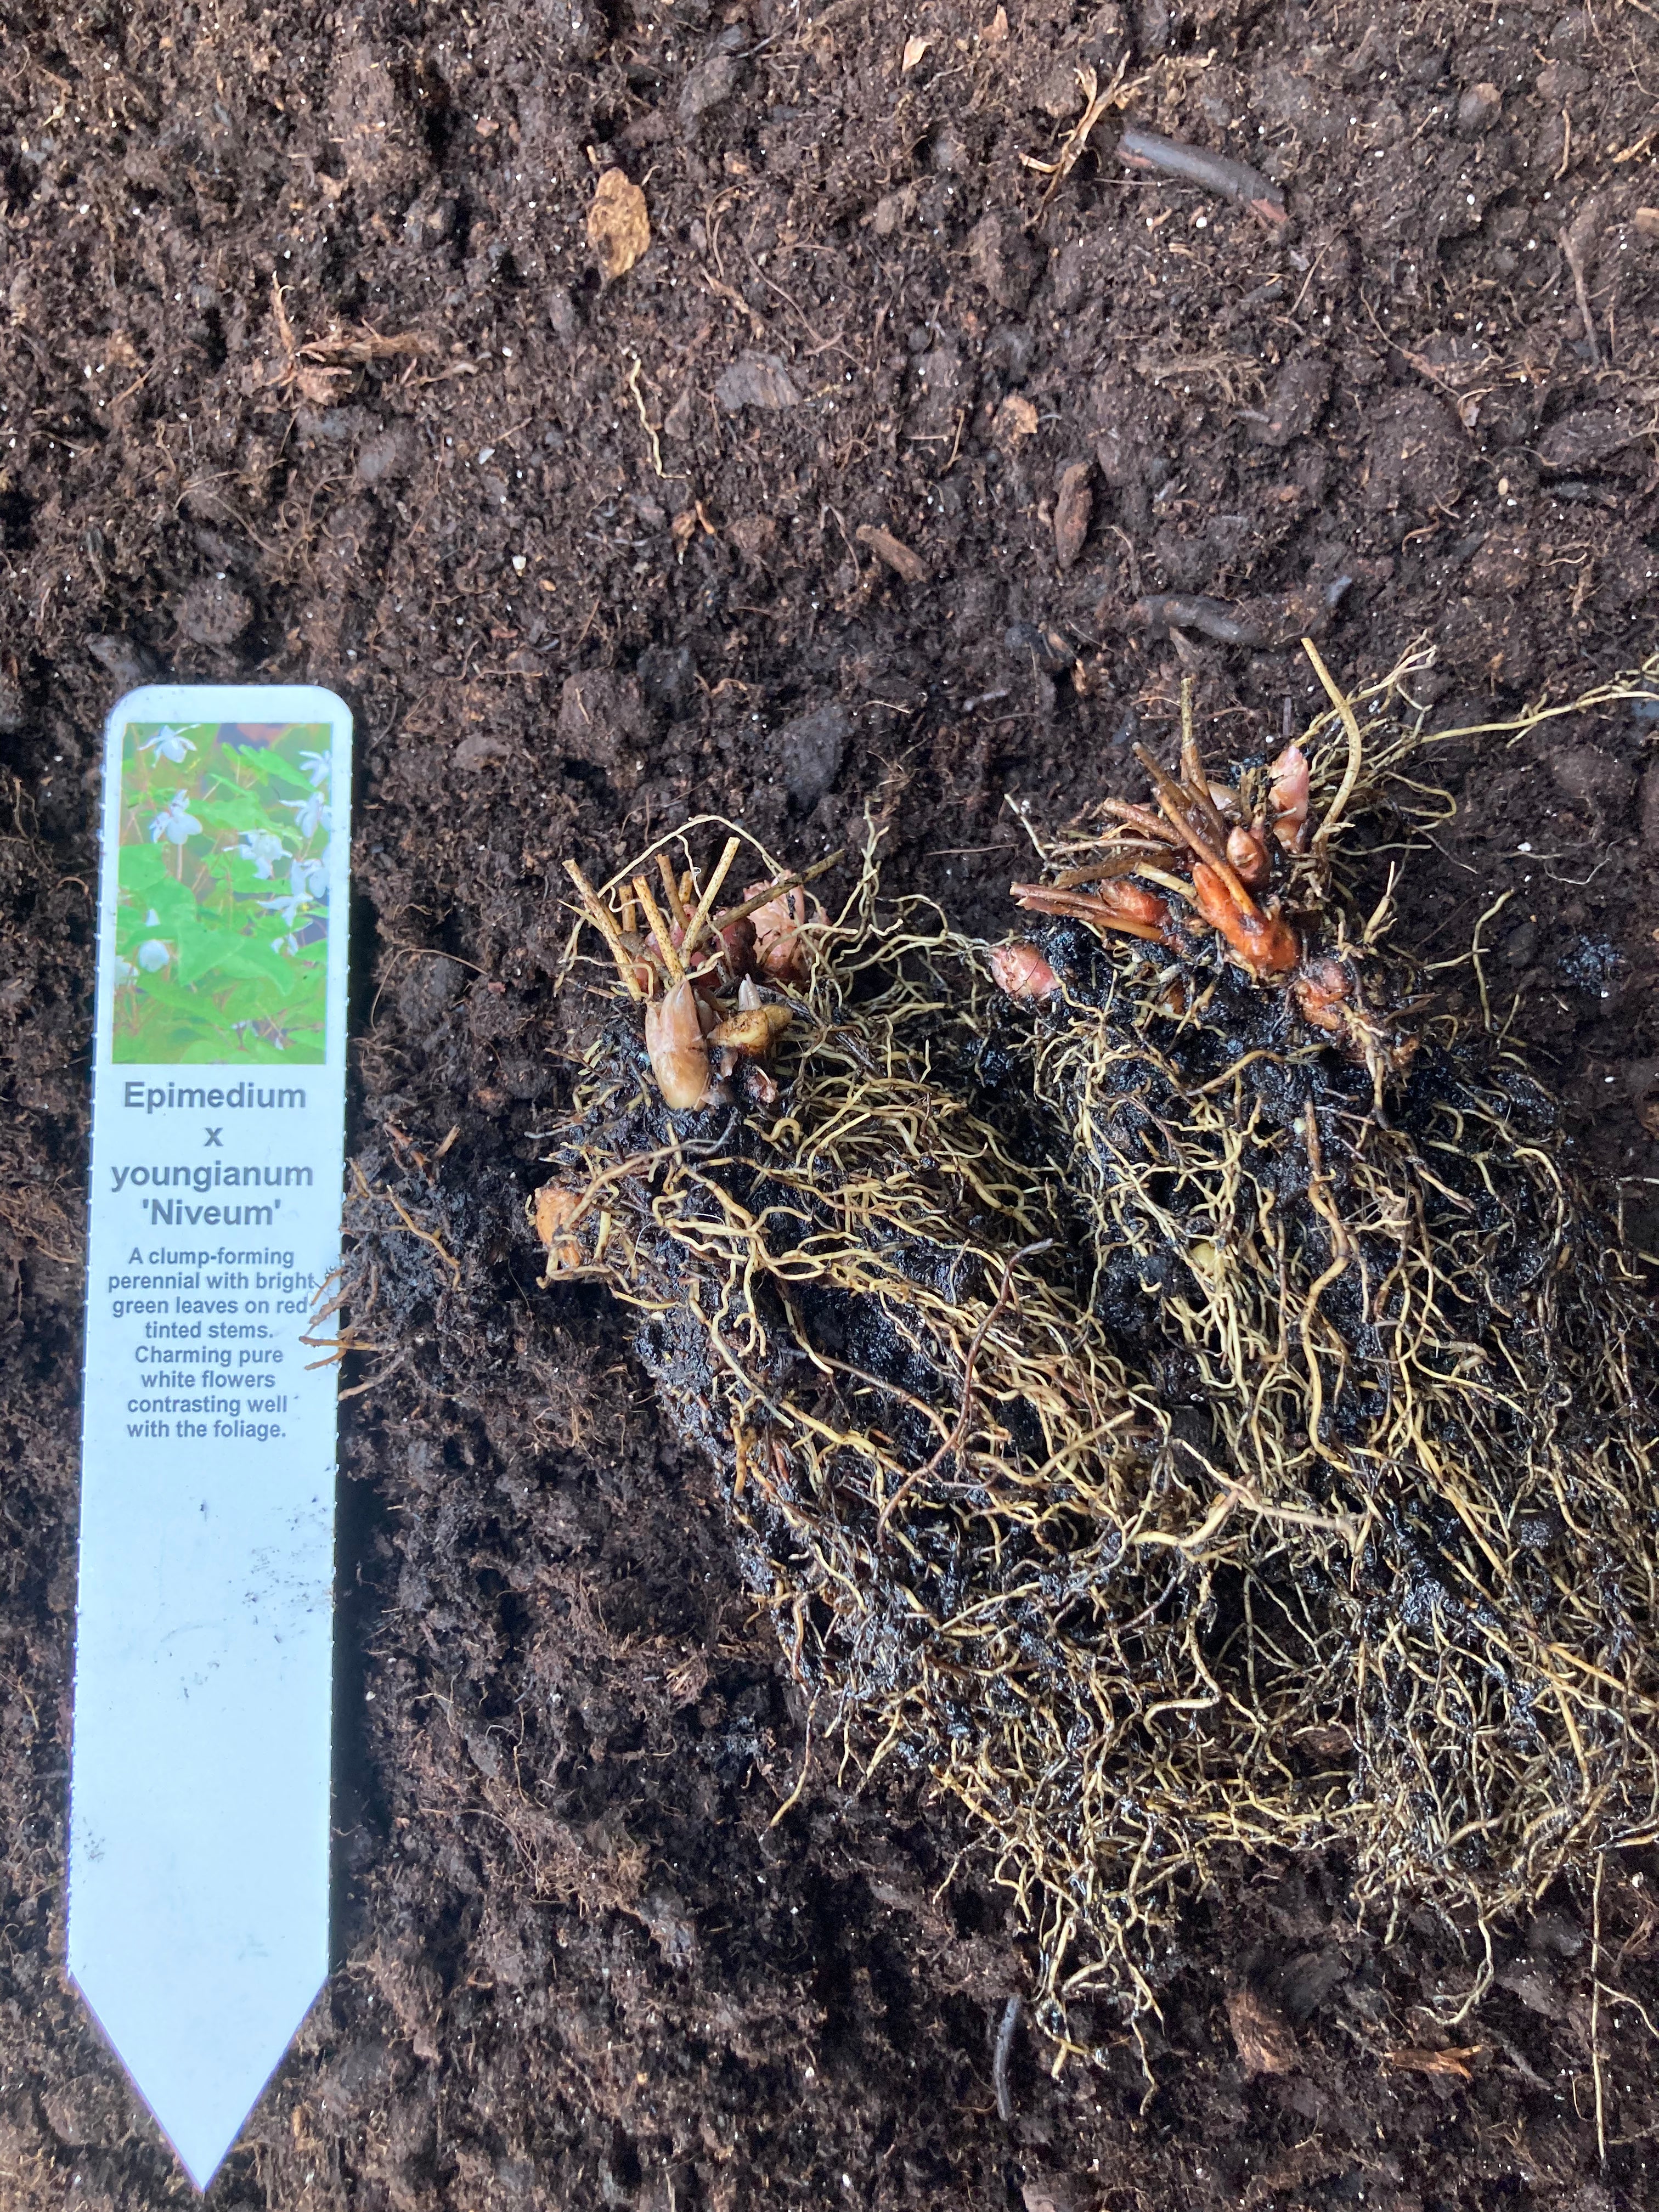 Epimedium x youngianum 'Niveum' (White) or Barrenwort (Section of Bare Root) Free UK